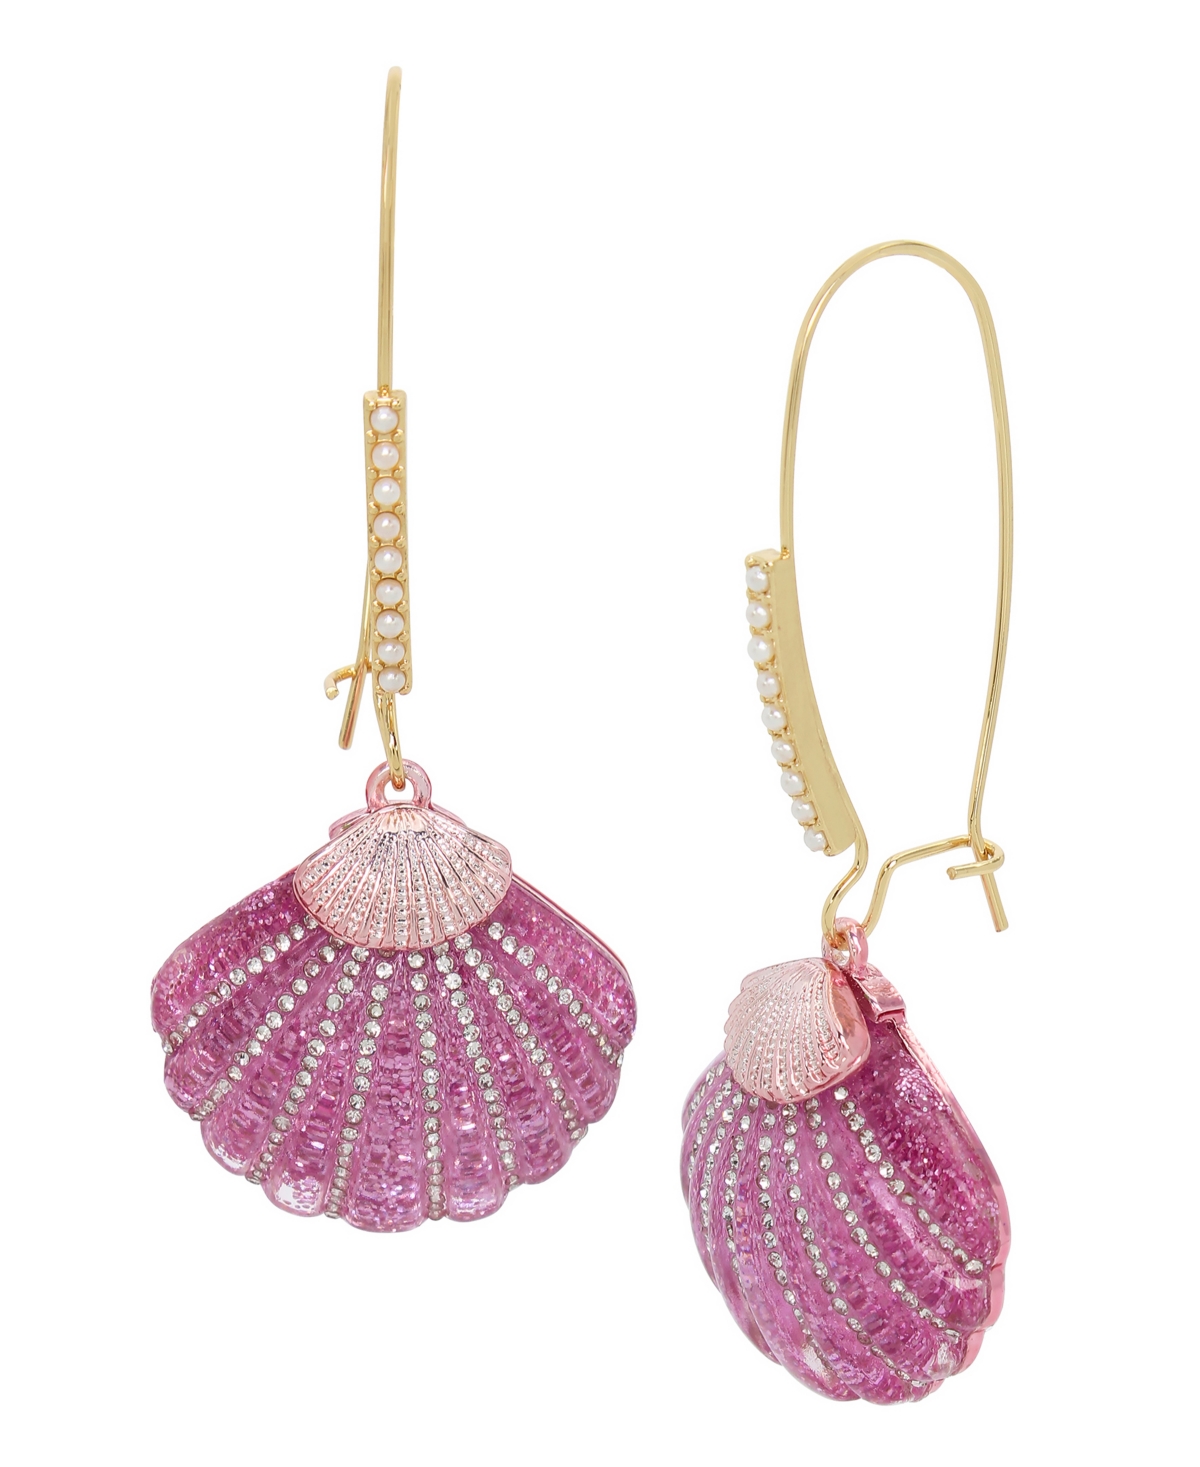 Faux Stone Seashell Dangle Earrings - Pink, Gold